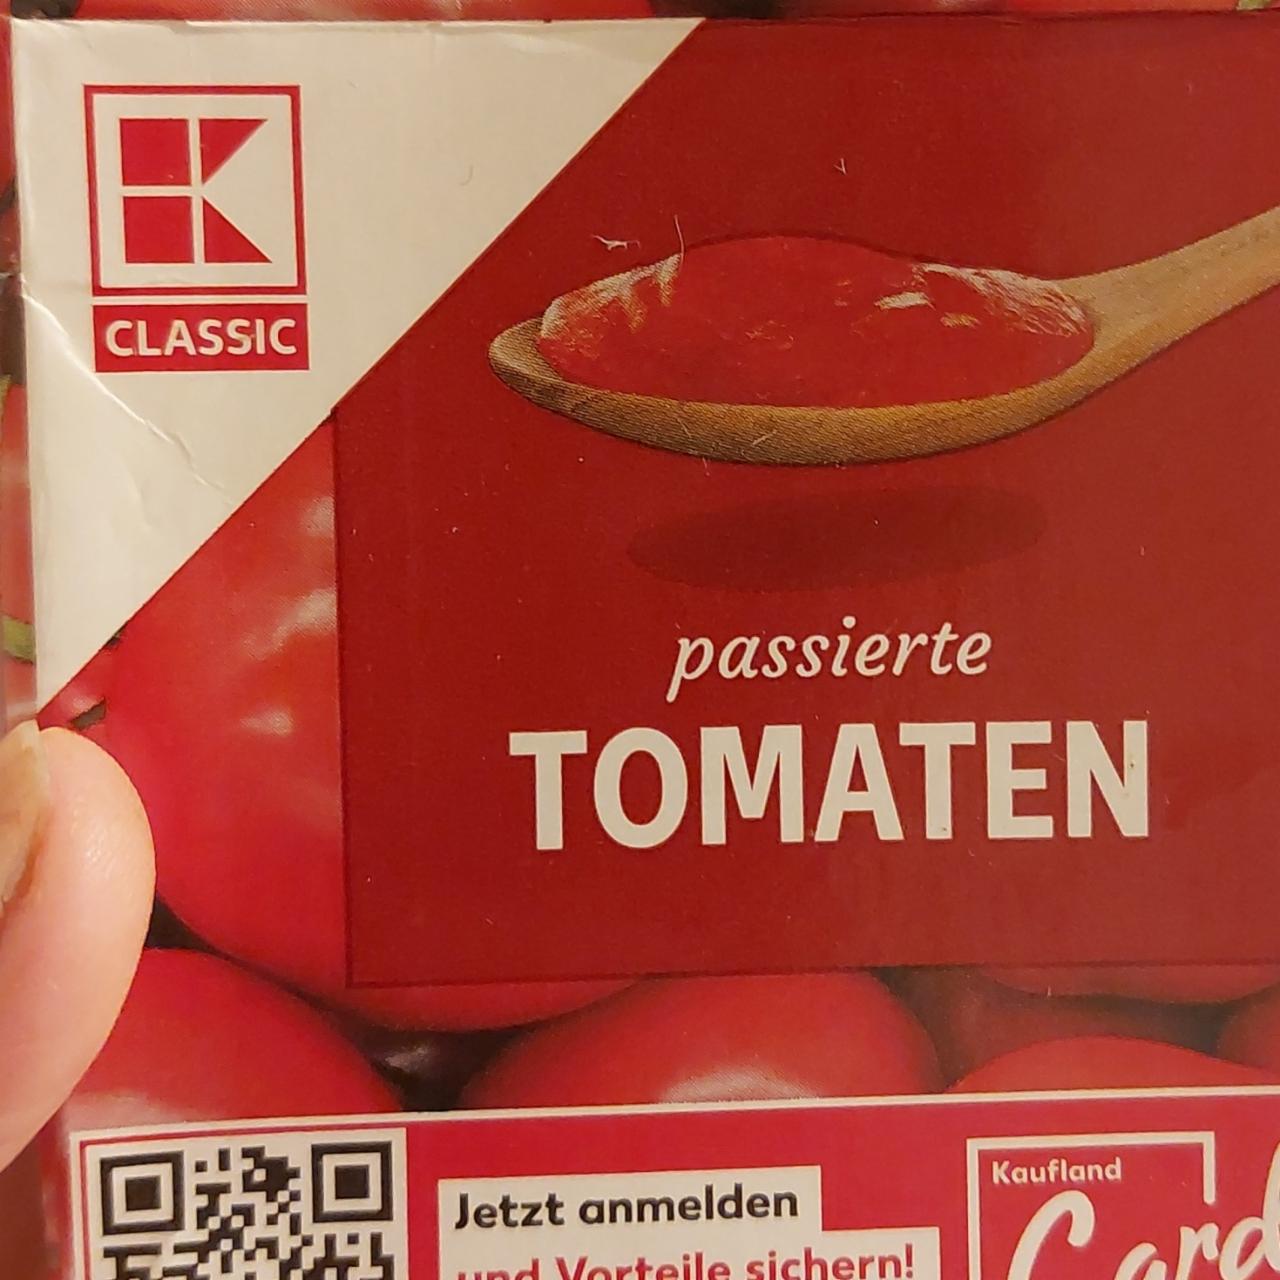 Fotografie - Passierte tomaten K-Classic